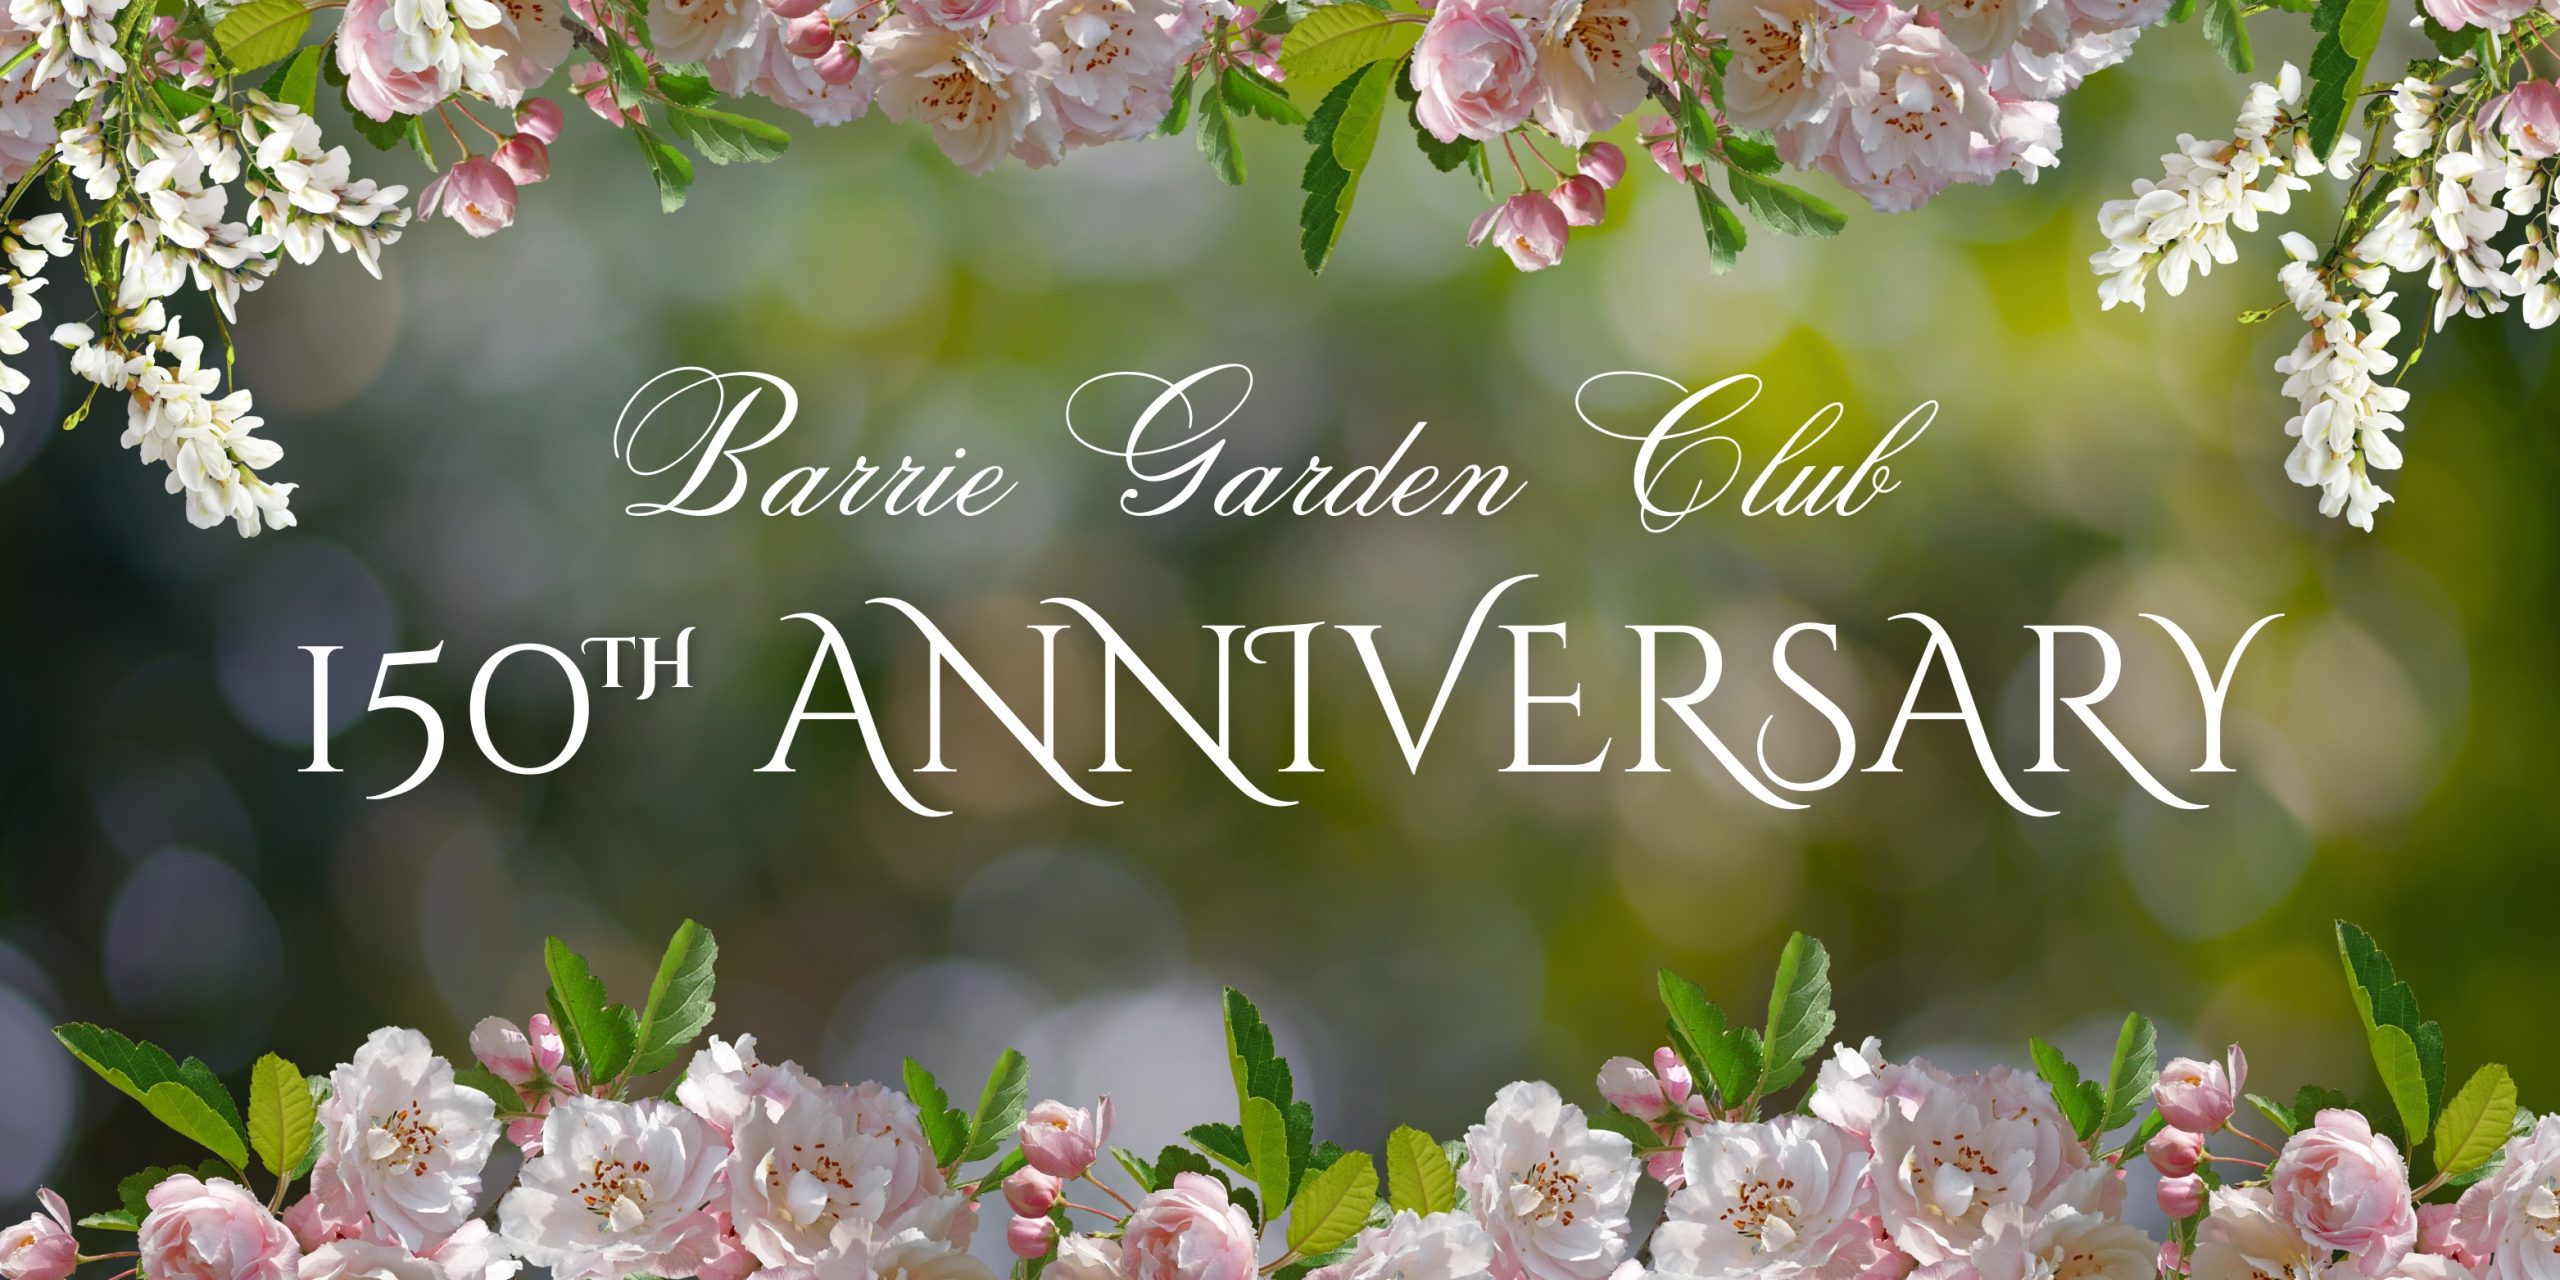 barrie-garden-club-anniversary-celebration-sunnidale-park